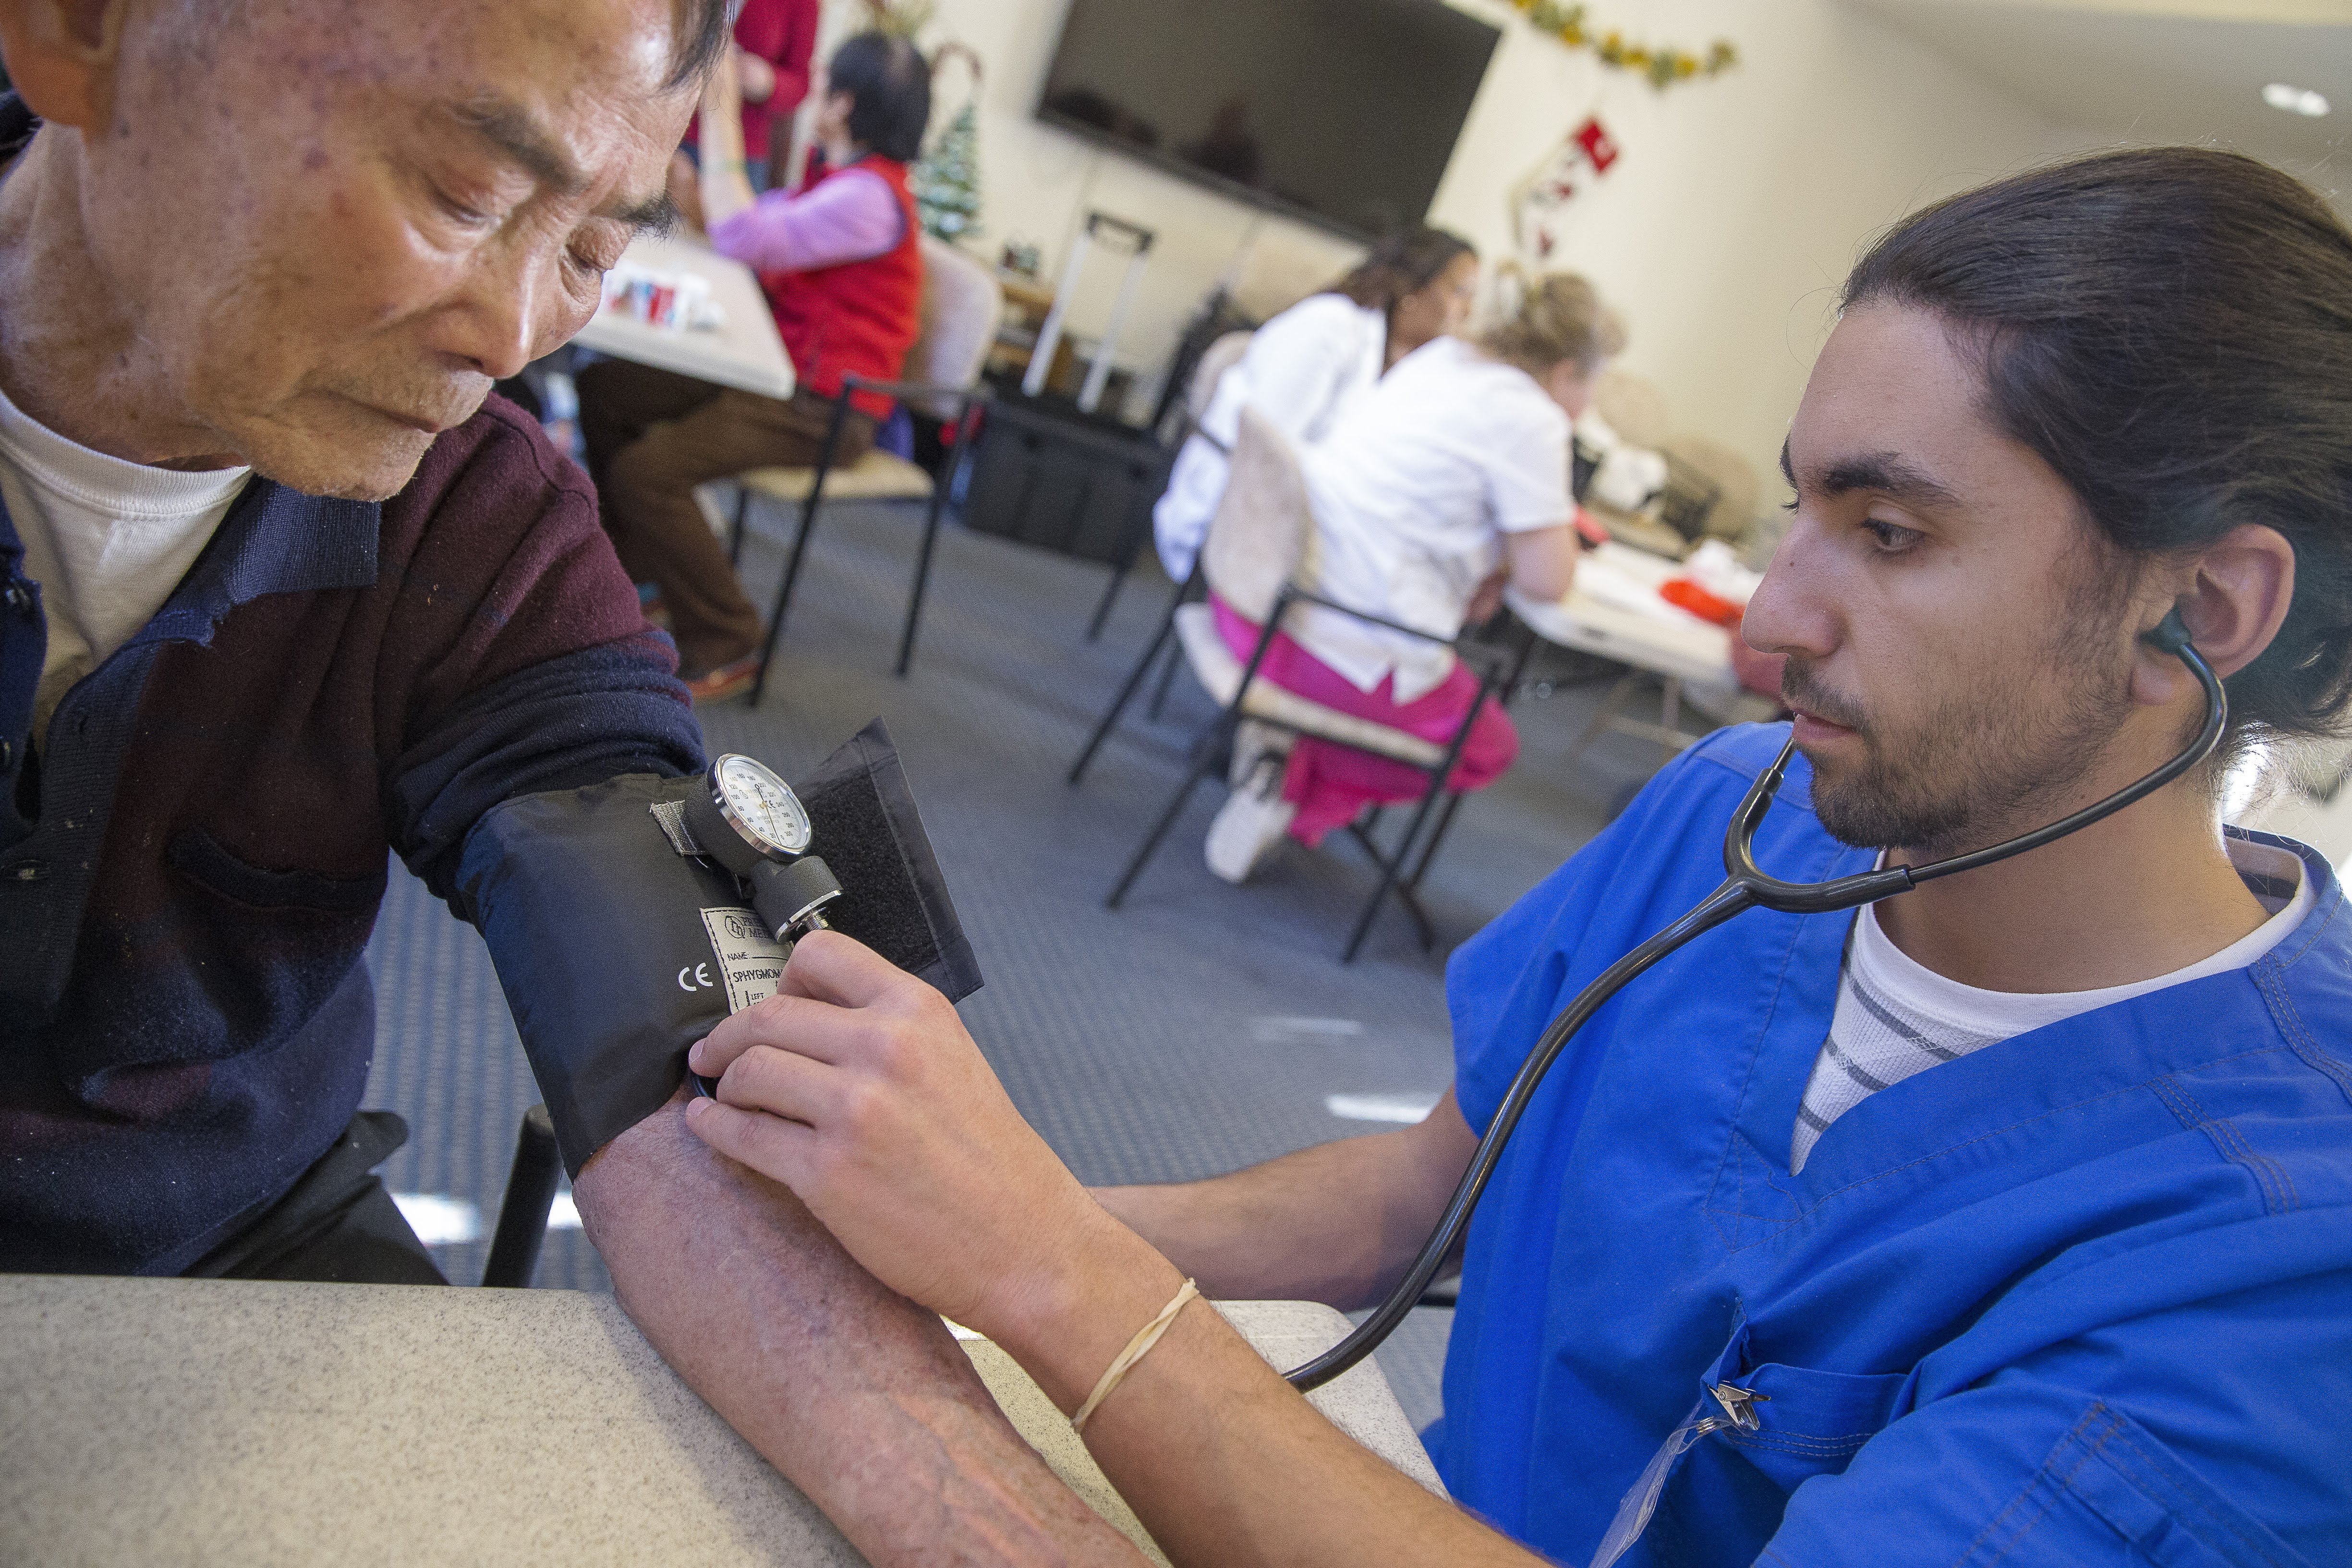 A nursing student checking blood pressure